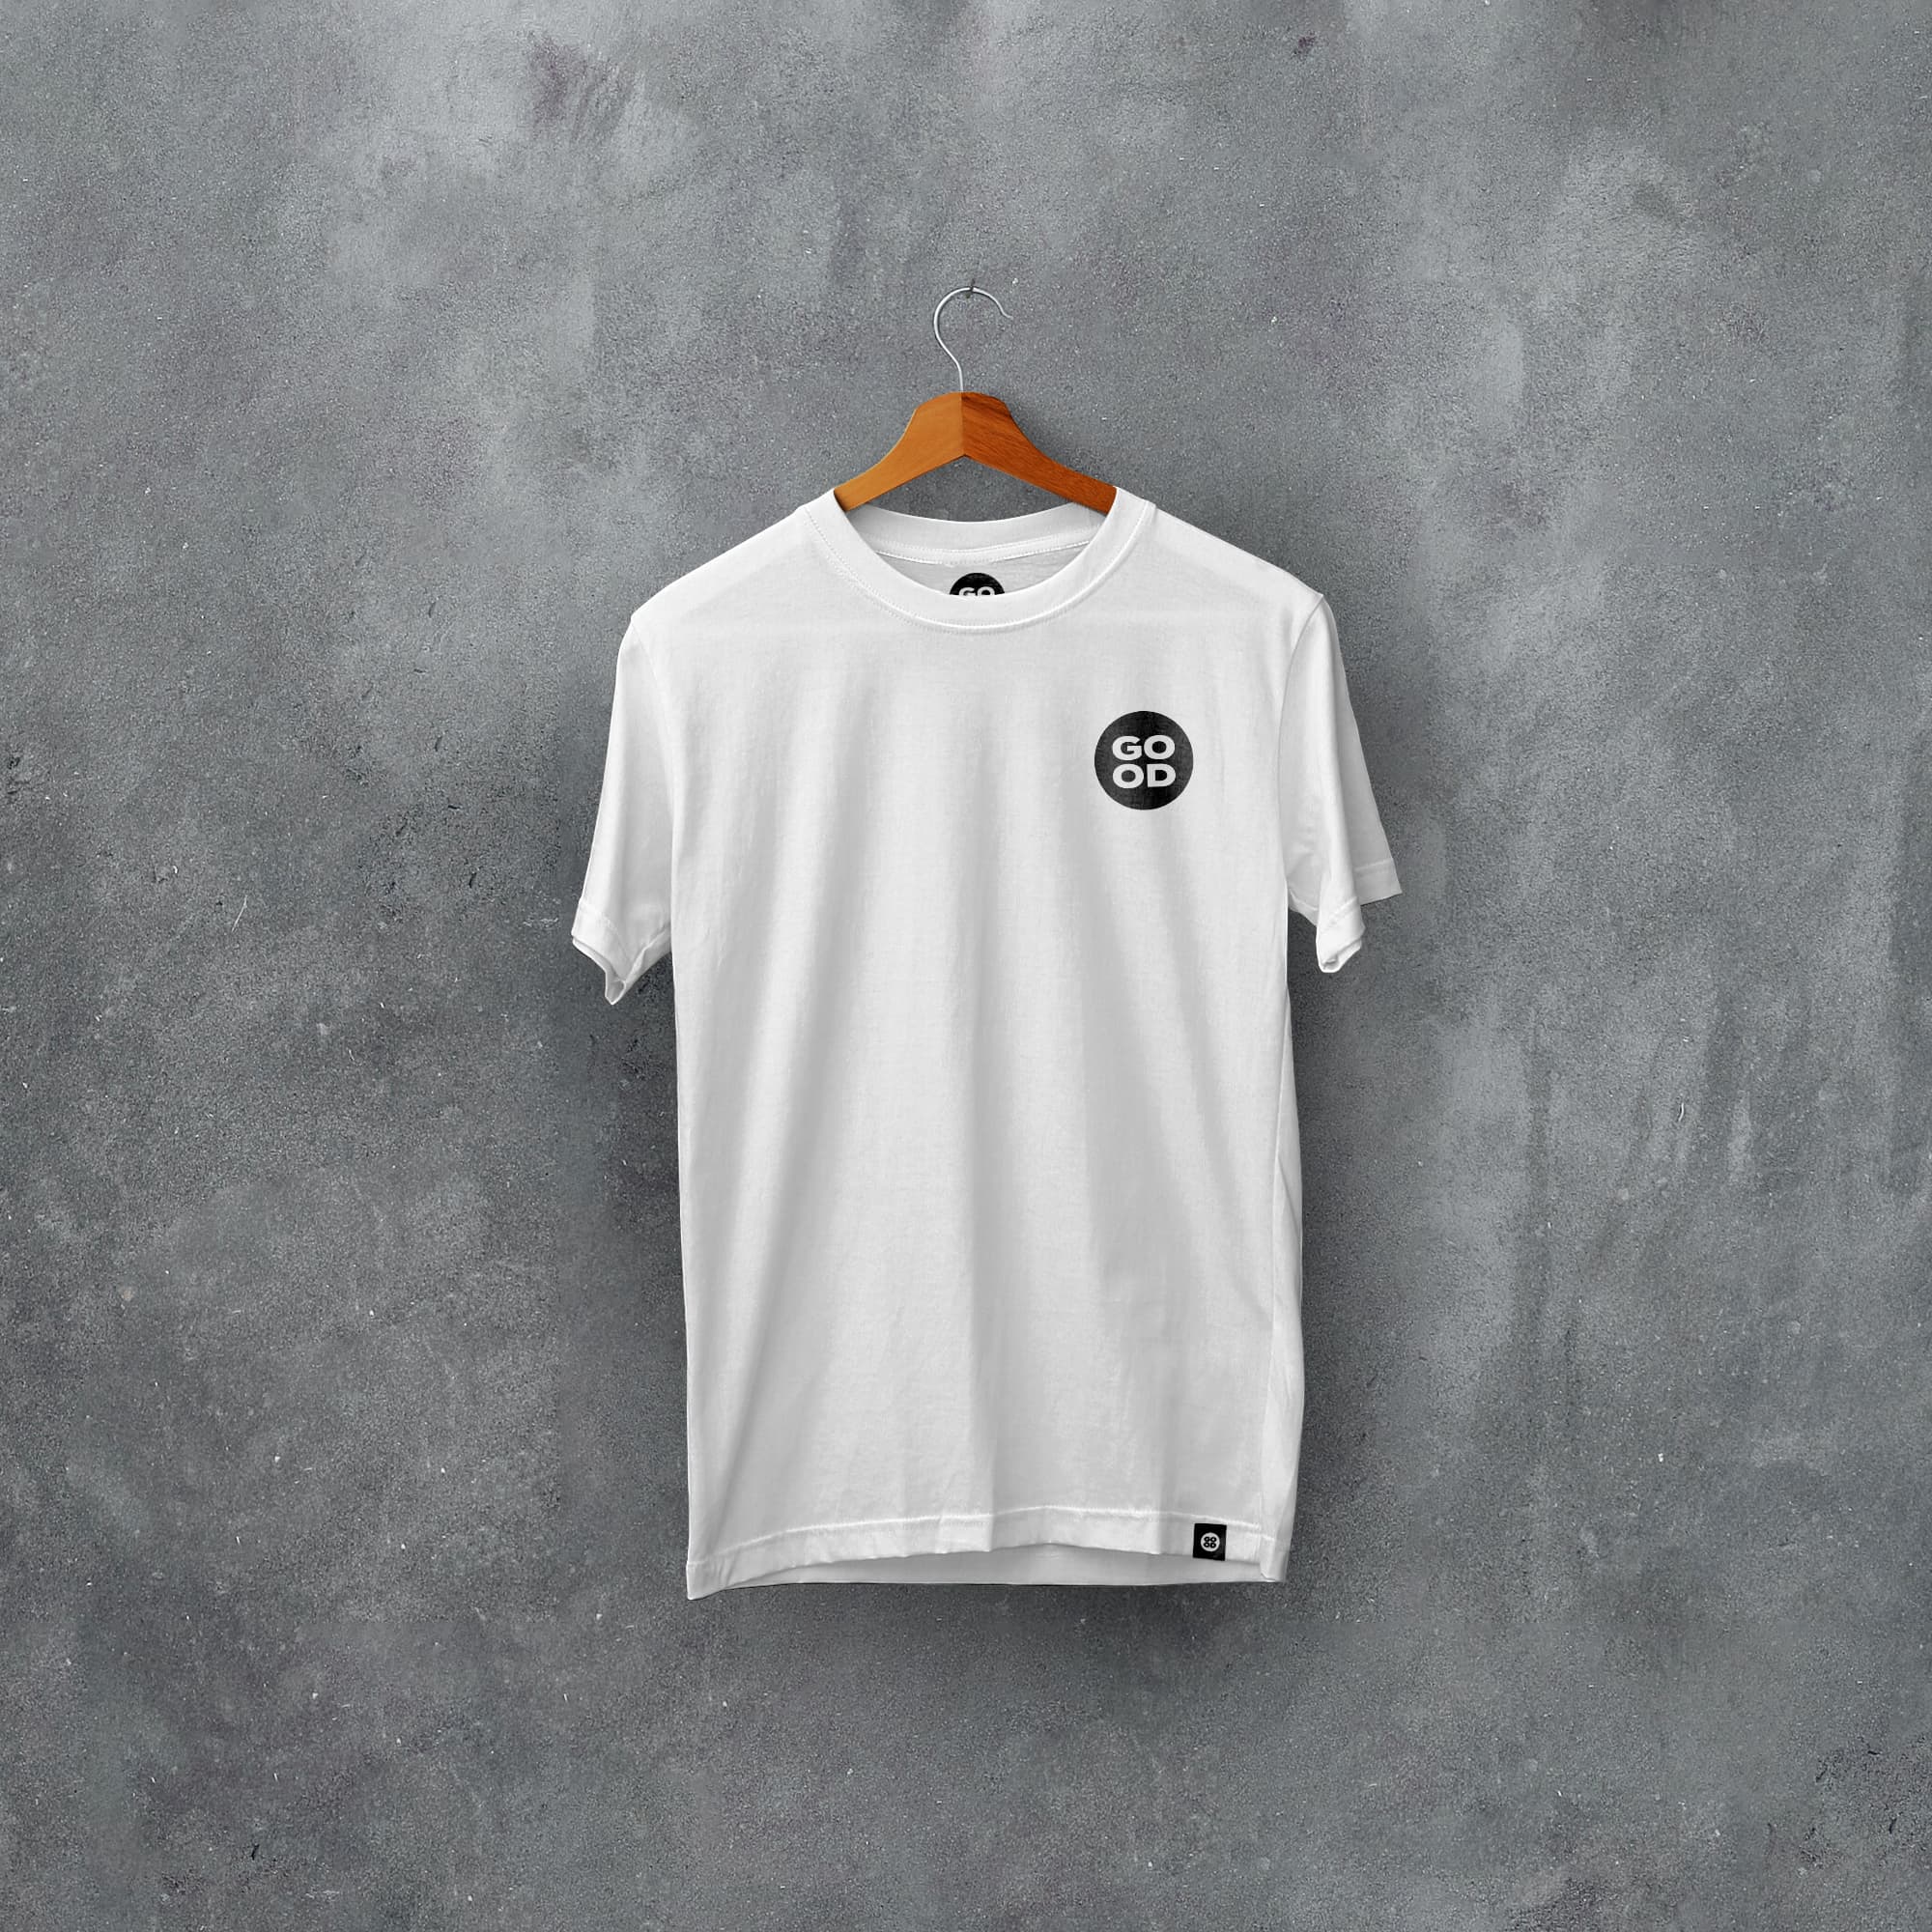 Southampton Classic Kits Football T-Shirt